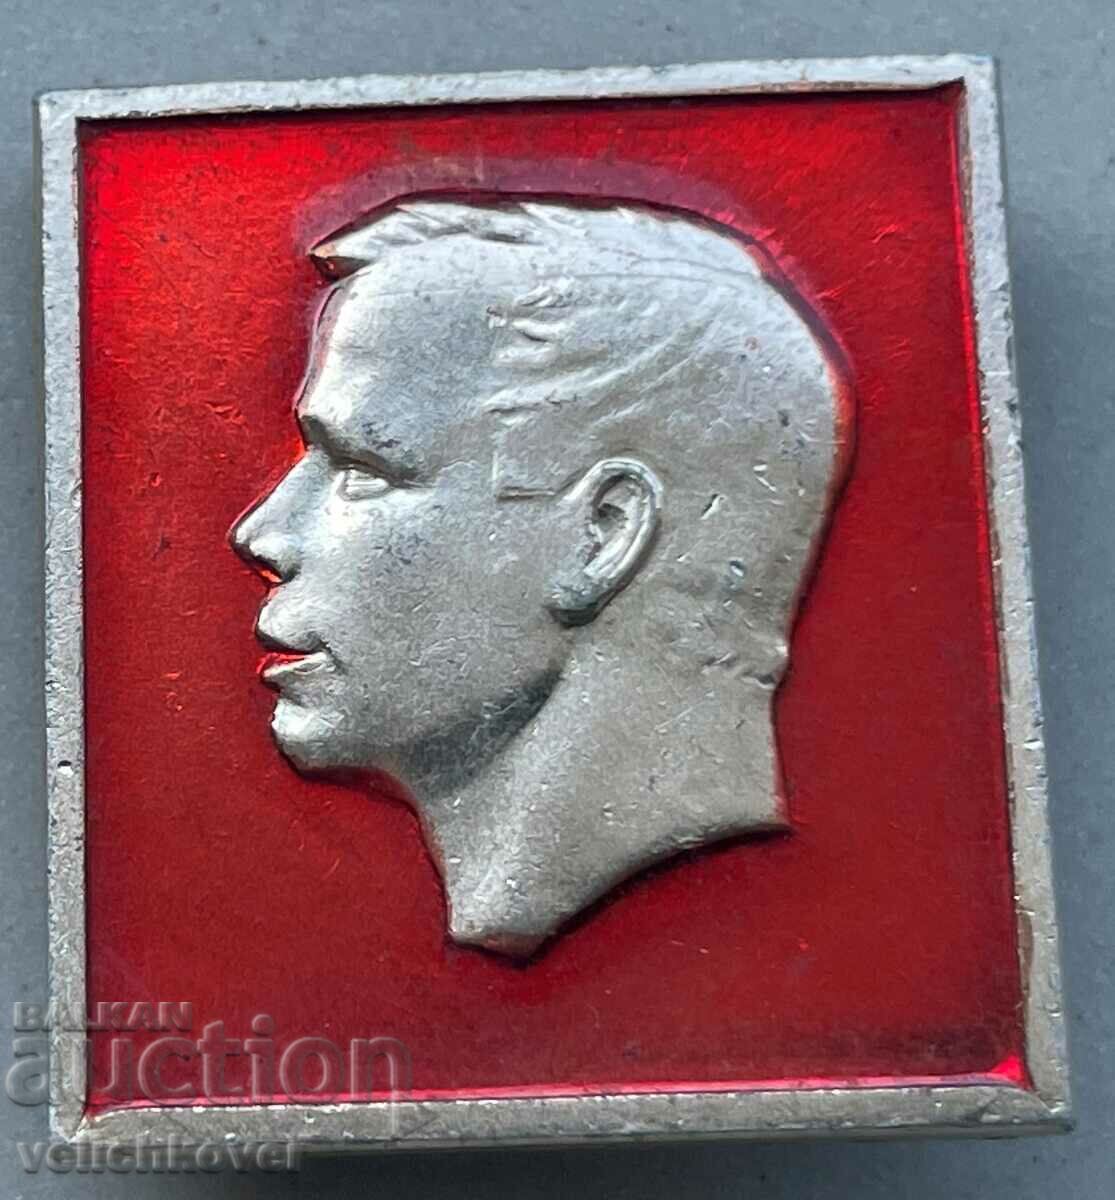 34032 USSR space sign image of cosmonaut Yuri Gagarin